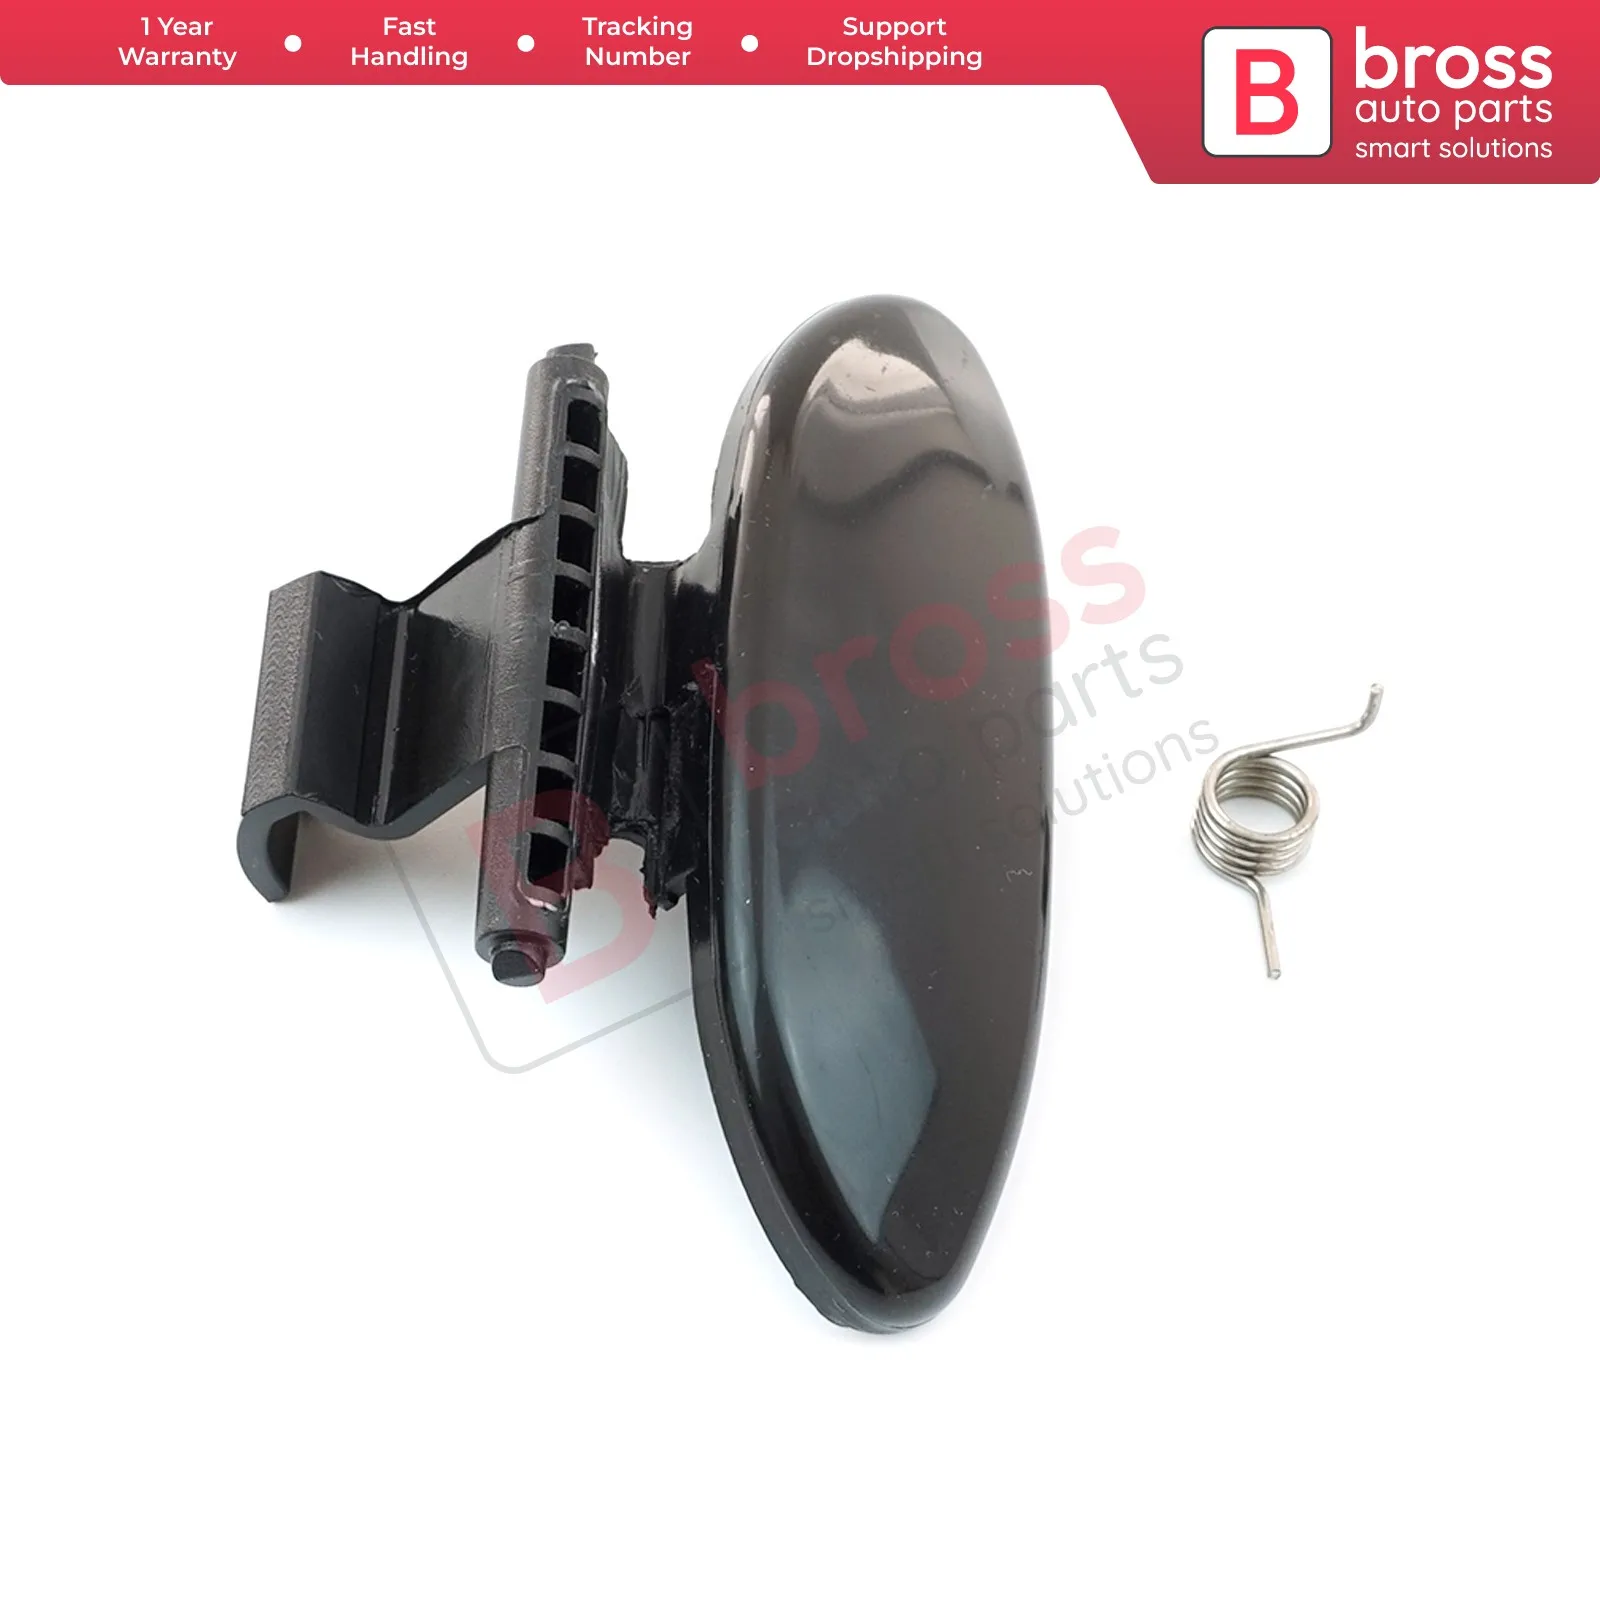 Bross Auto Parts BDP988 Glove Box Lid Handle Button Opener 8218A3, 8218.A3 BLACK COLOR for Citroen Elysee C2 C3 Peugeot 301